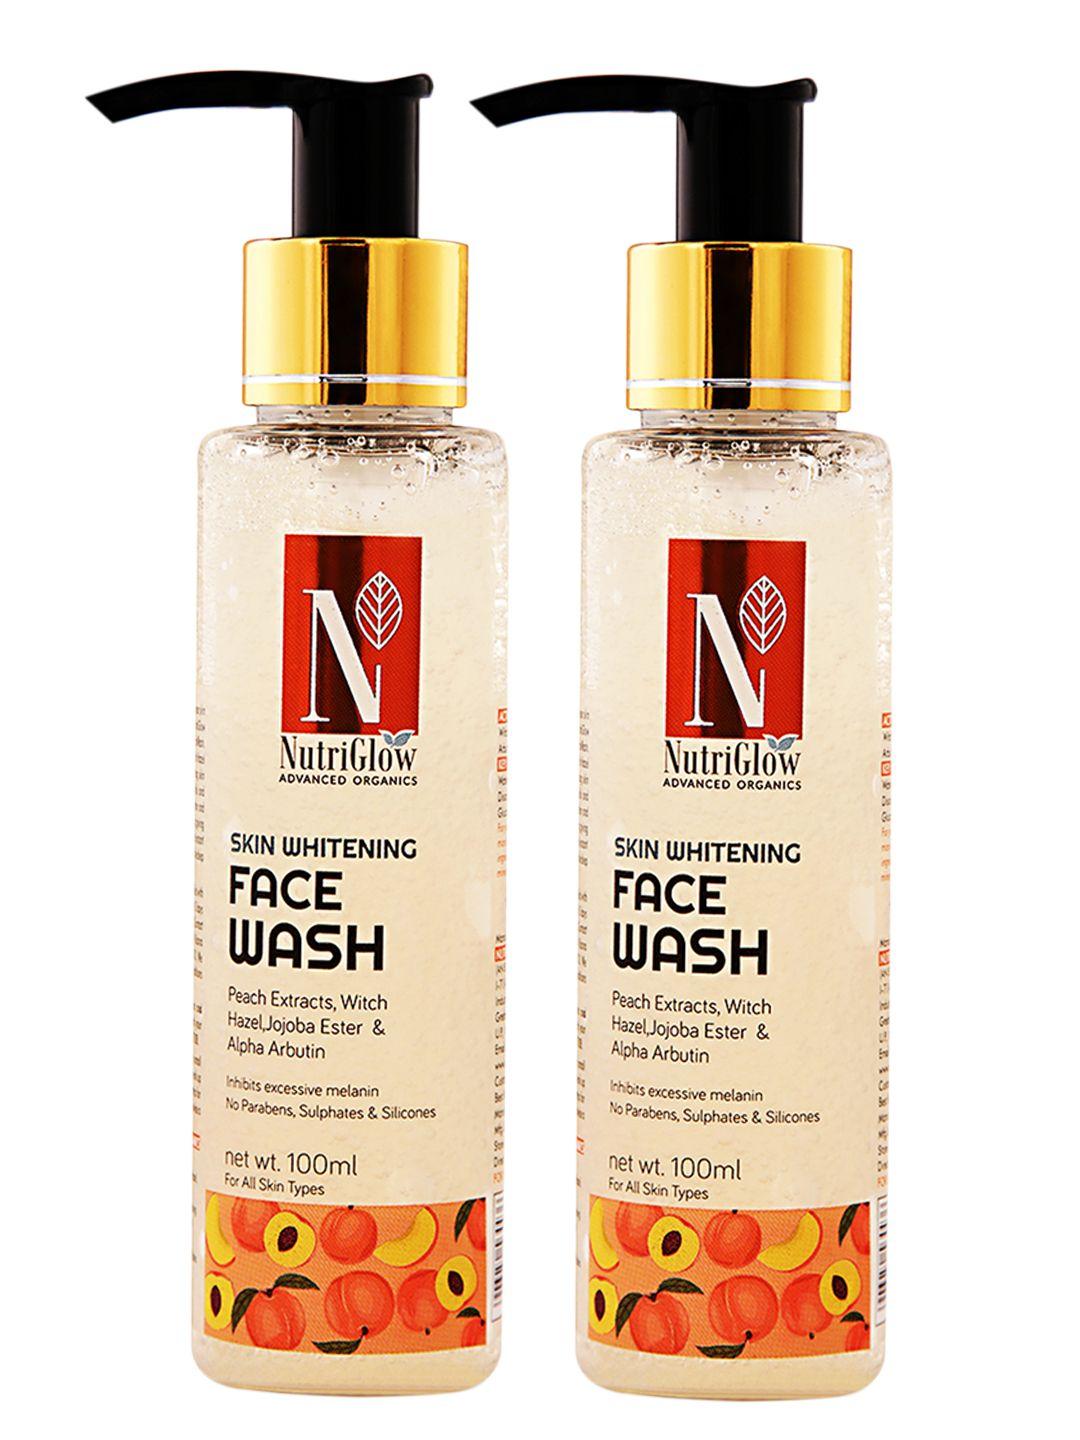 nutriglow advanced organics set of 2 skin whitening sustainable face wash 100 ml each